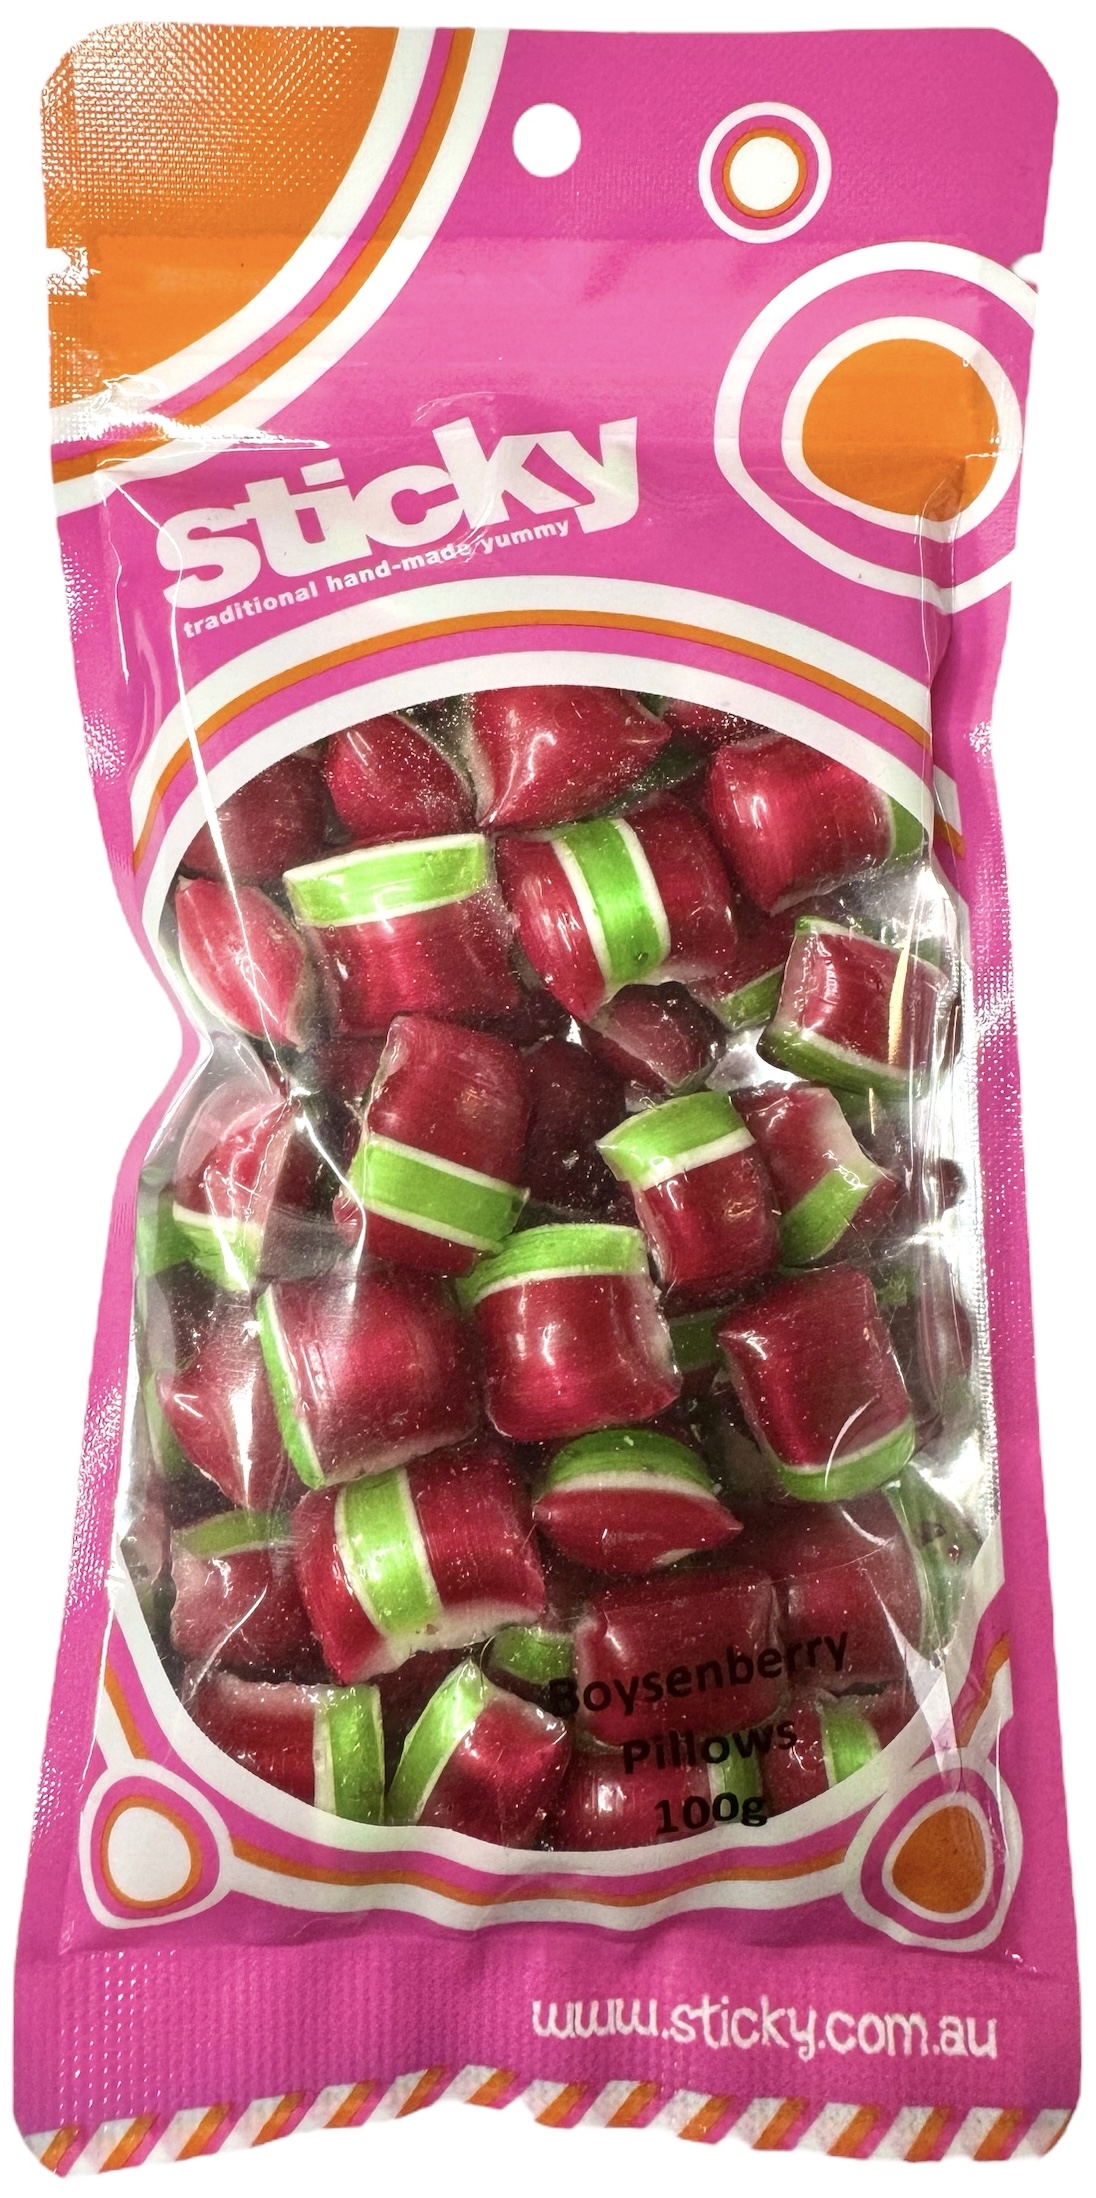 Boysenberry Pillows - 100g Retail Bag